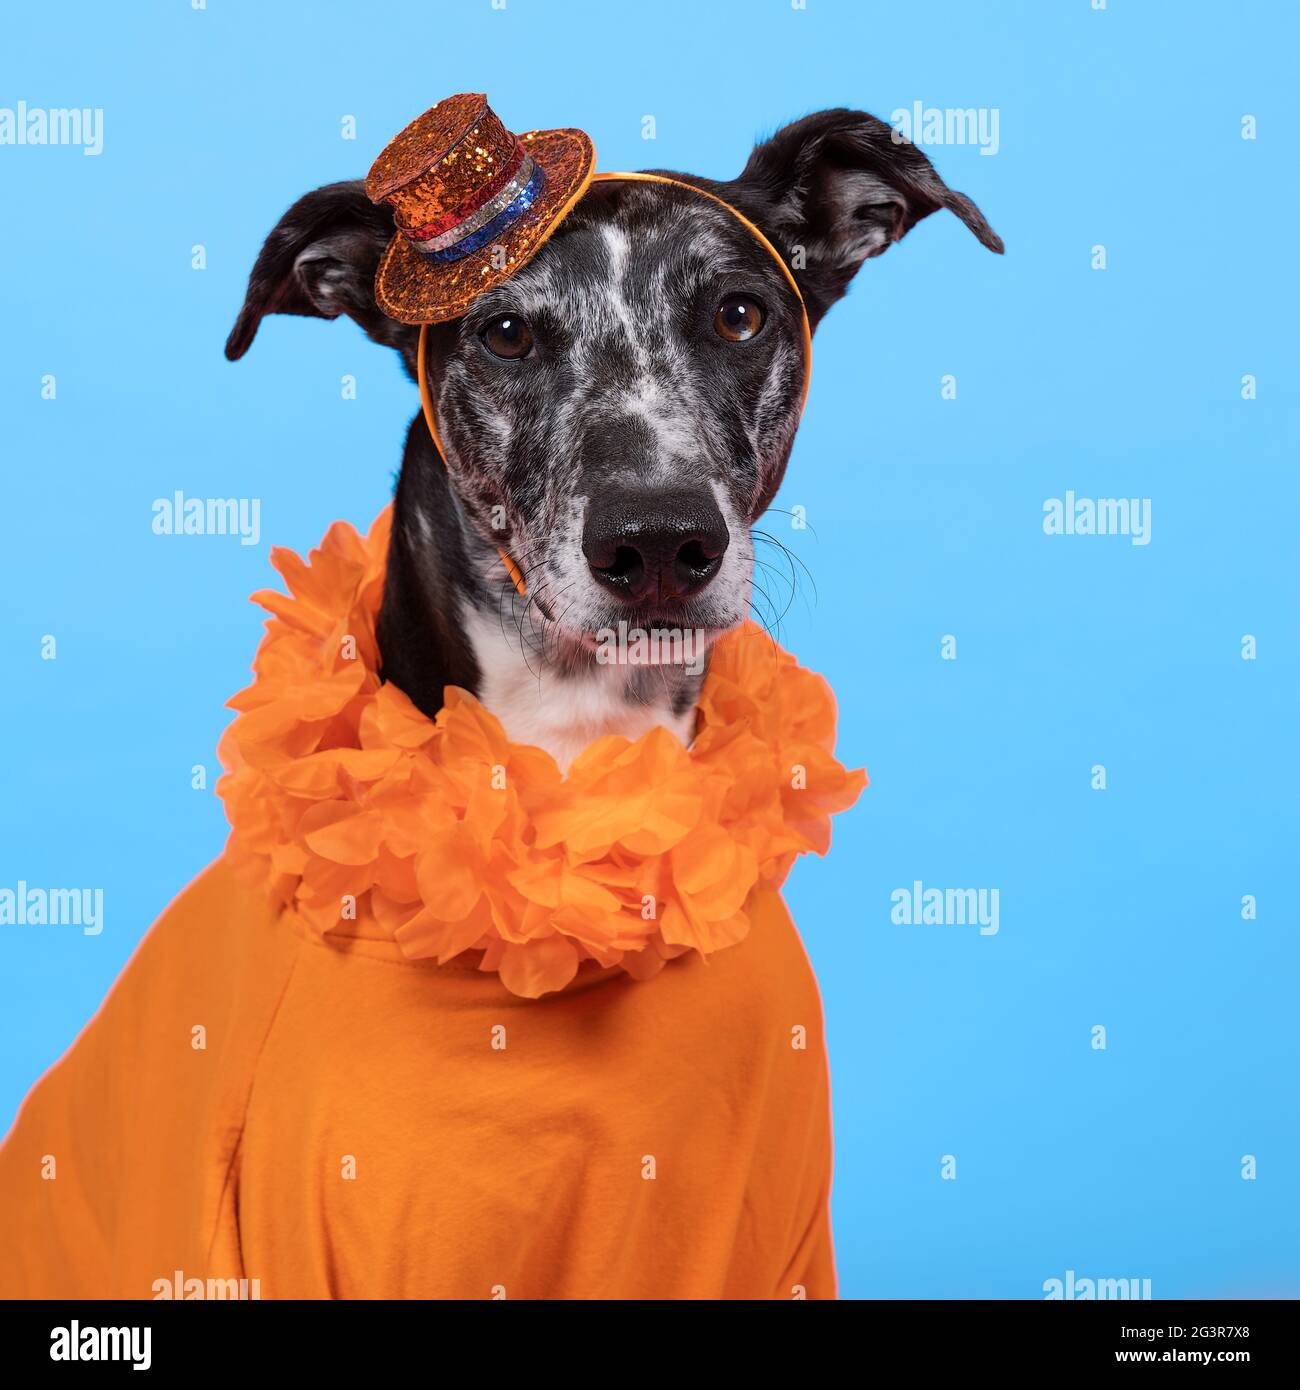 dog with football shirt Stock Photo - Alamy